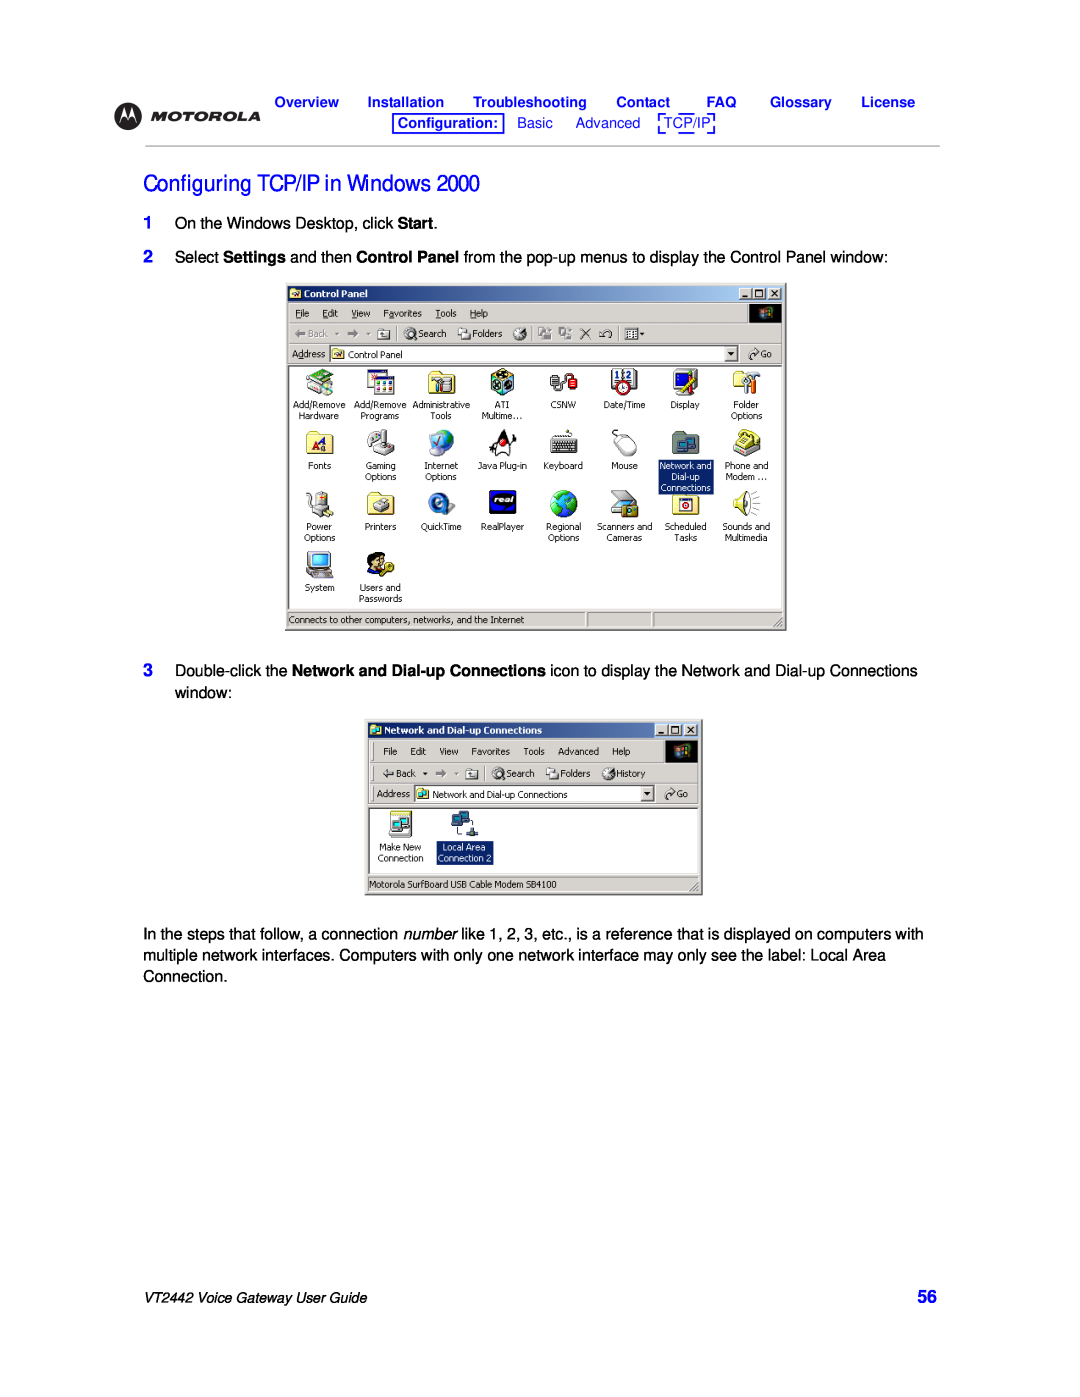 Motorola VT2442 manual Configuring TCP/IP in Windows 